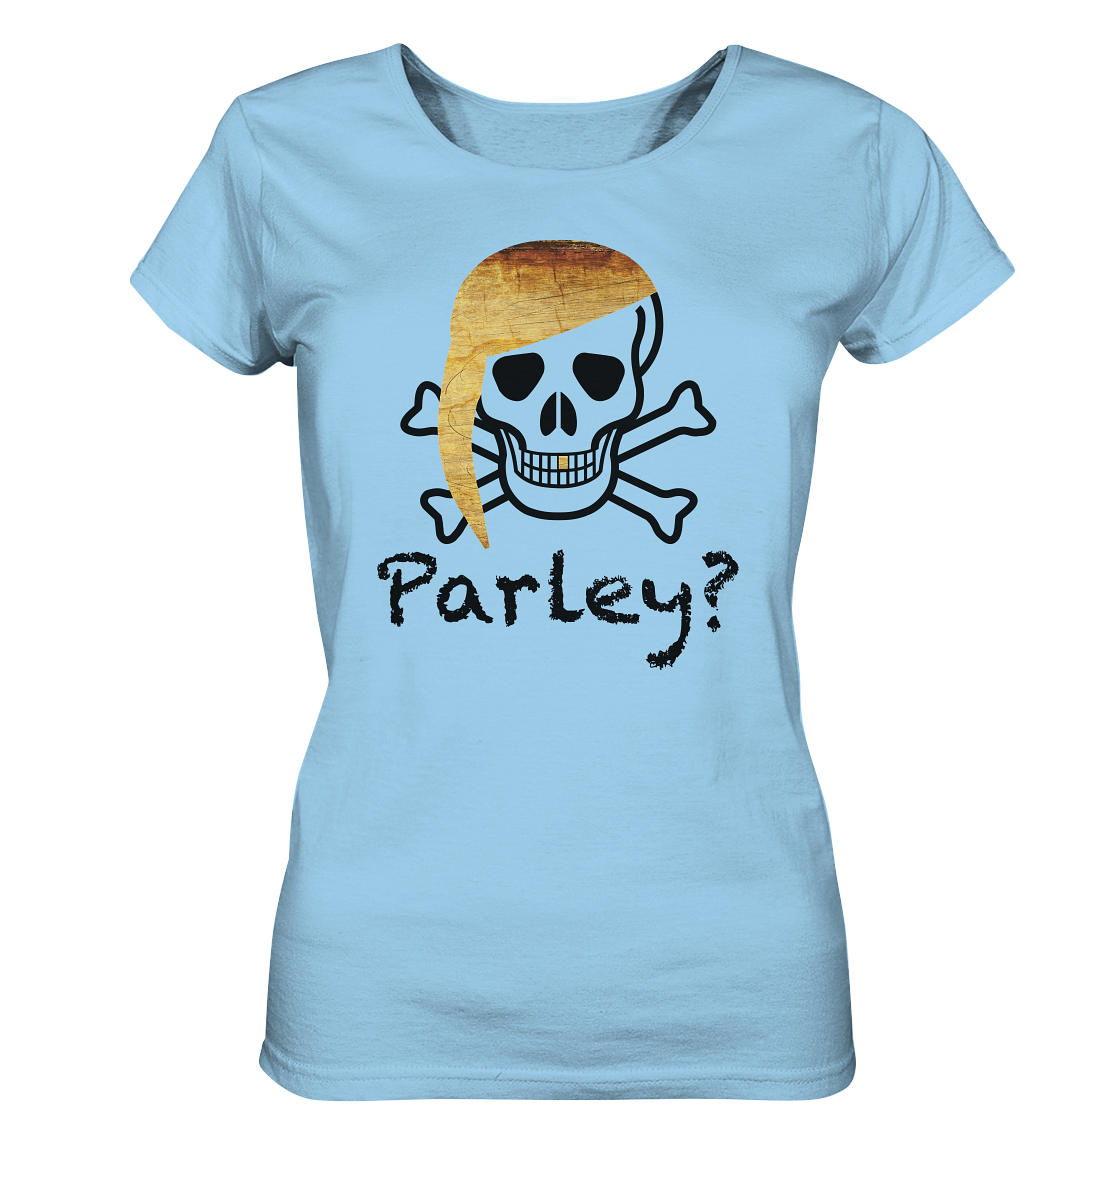 Parley? - Ladies Organic Shirt